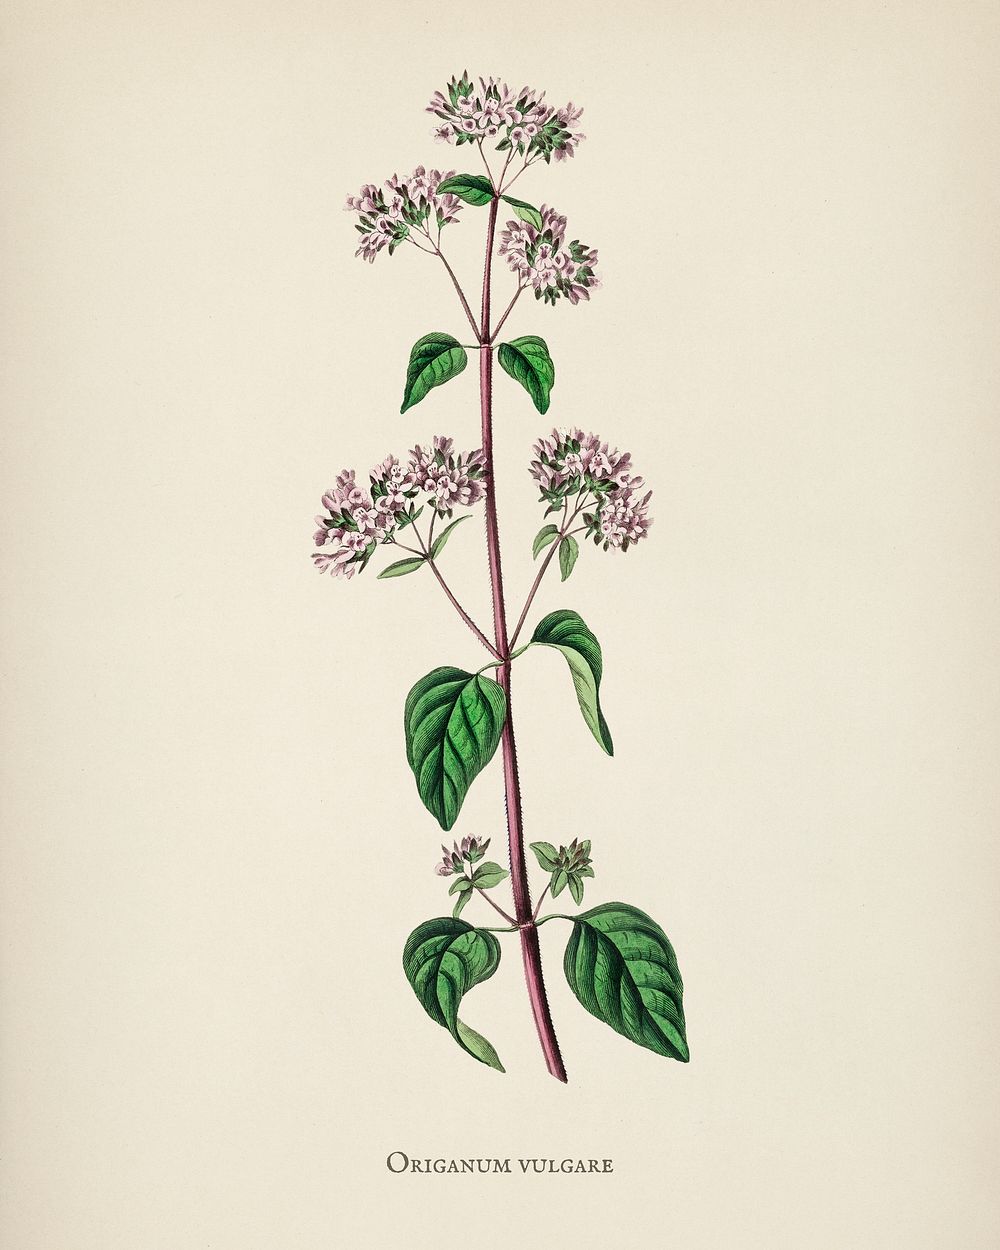 Oregano (Origanum vulgare) illustration from Medical Botany (1836) by John Stephenson and James Morss Churchill.